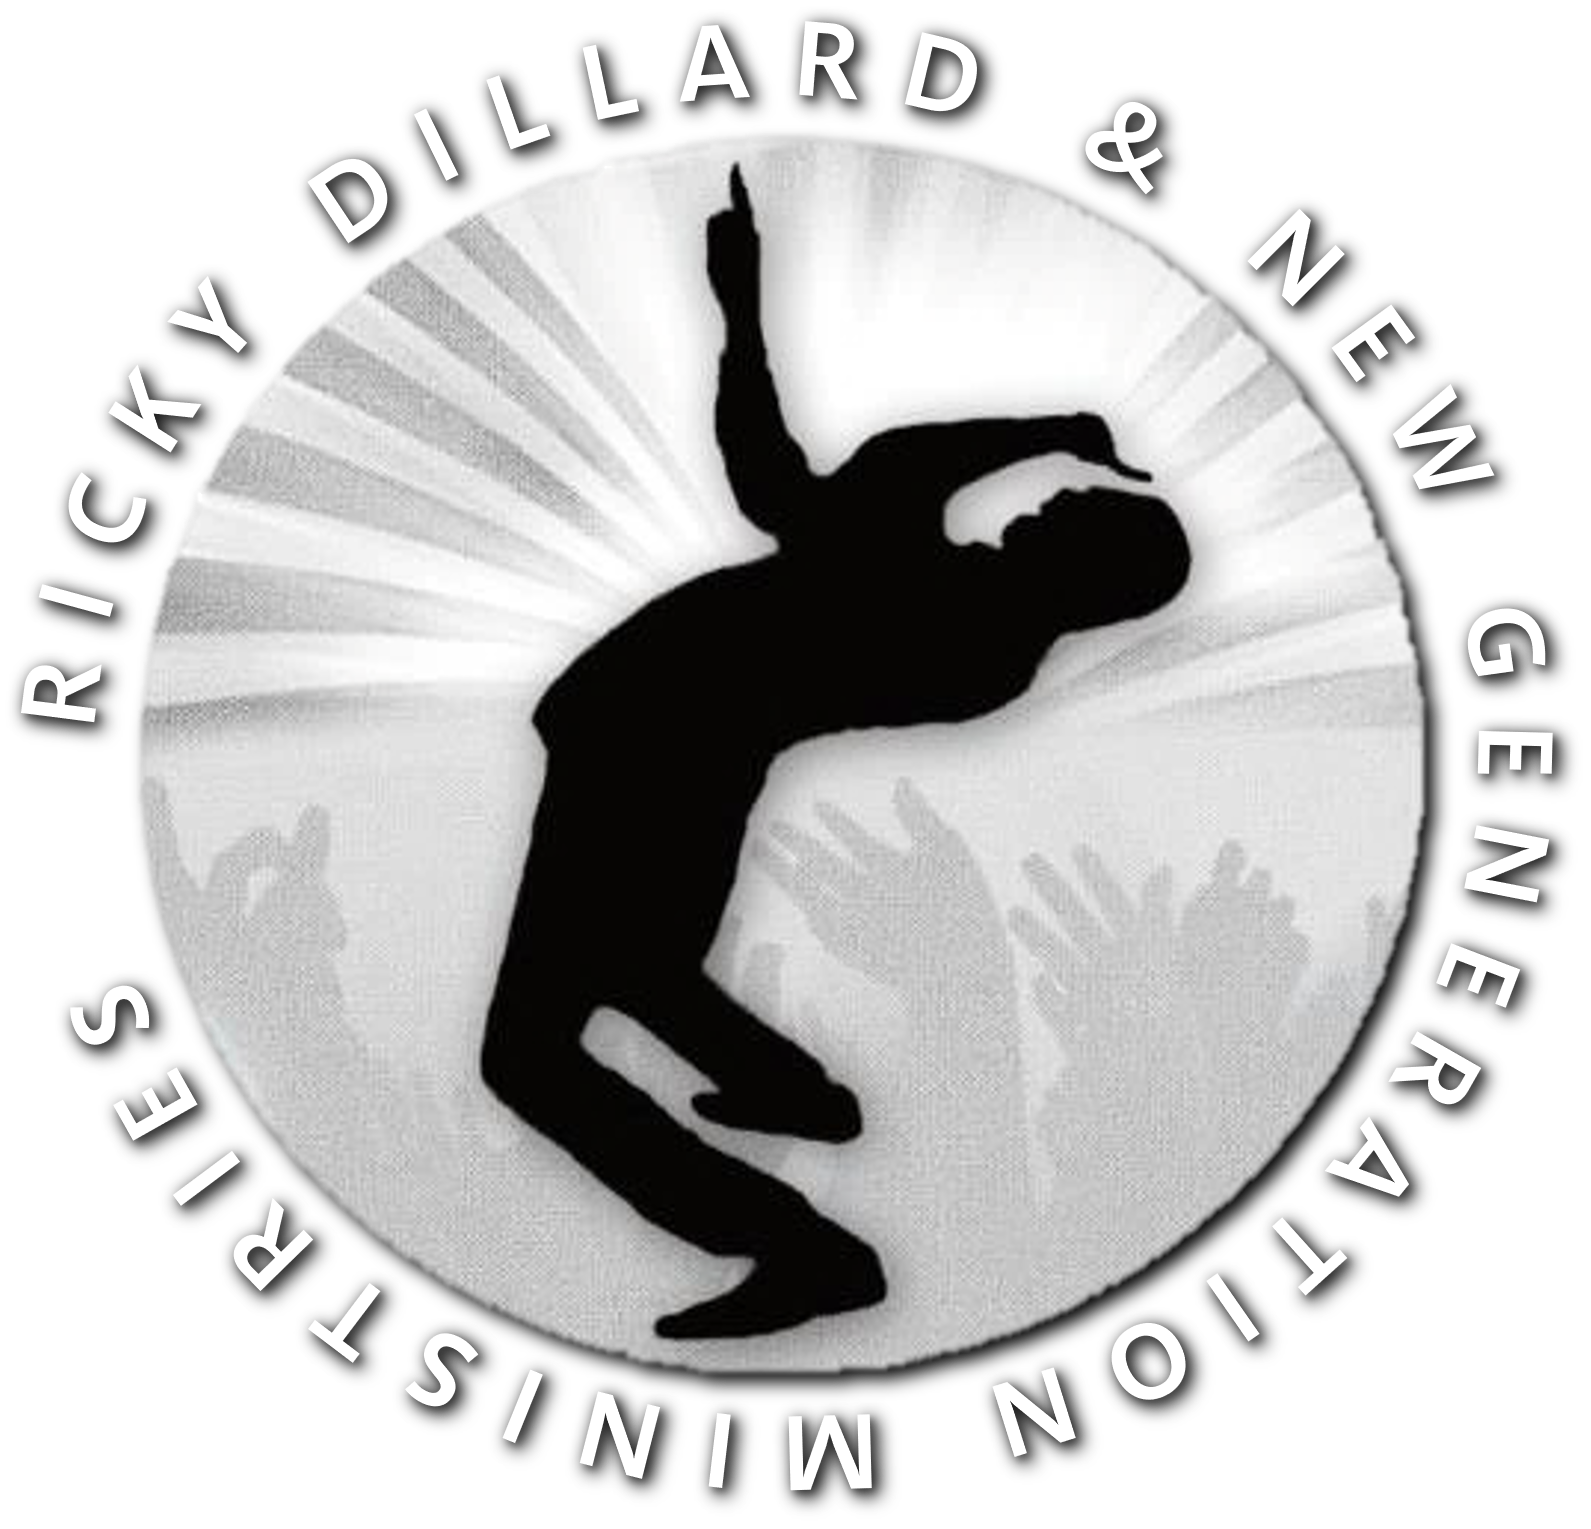 Ricky Dillard & New G